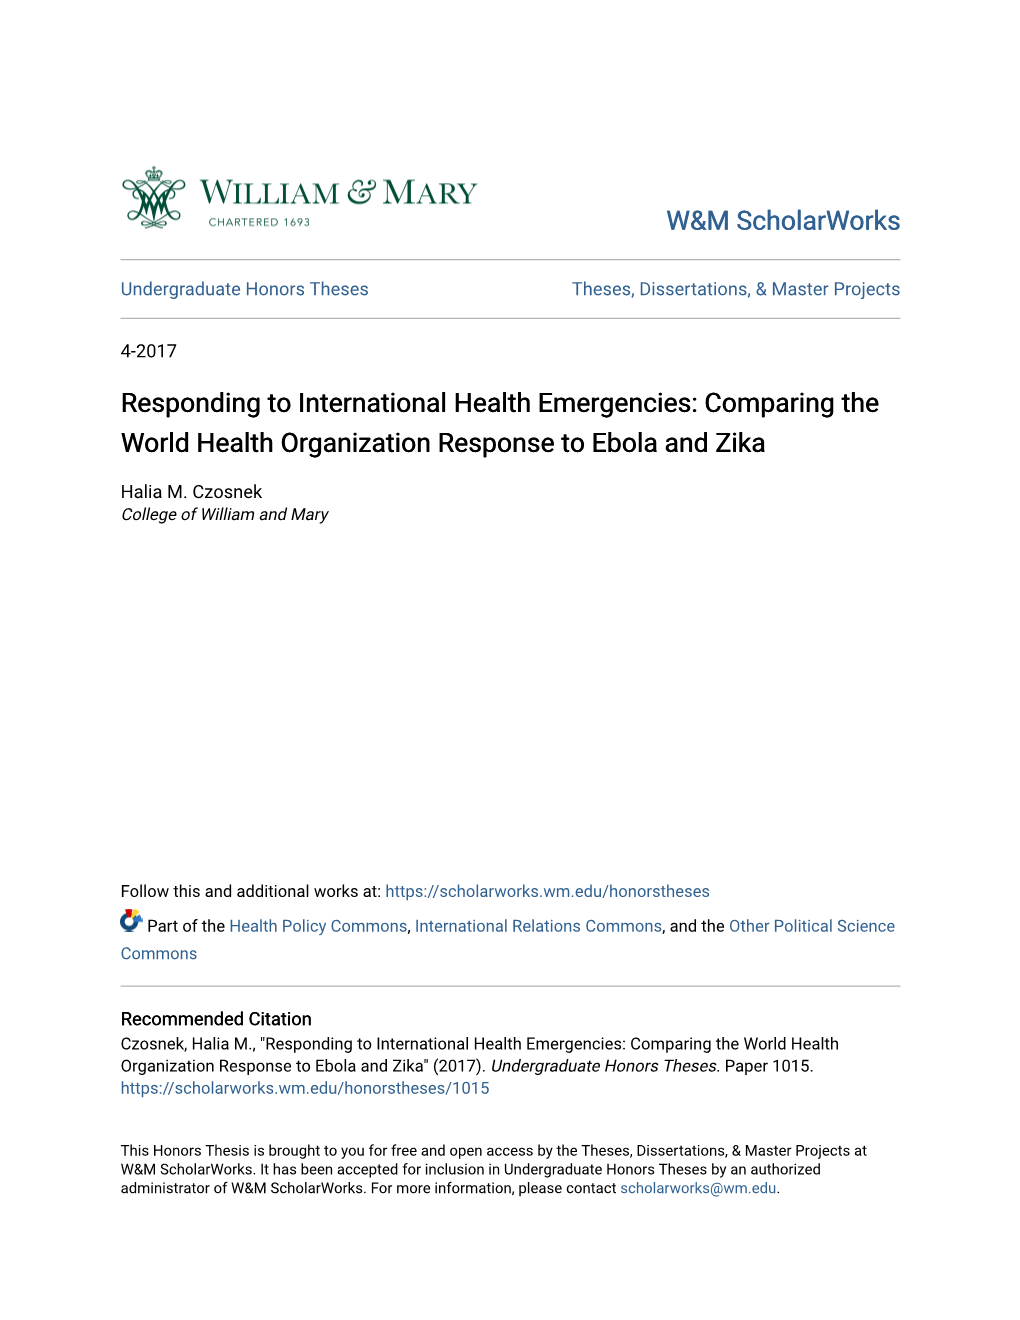 Comparing the World Health Organization Response to Ebola and Zika